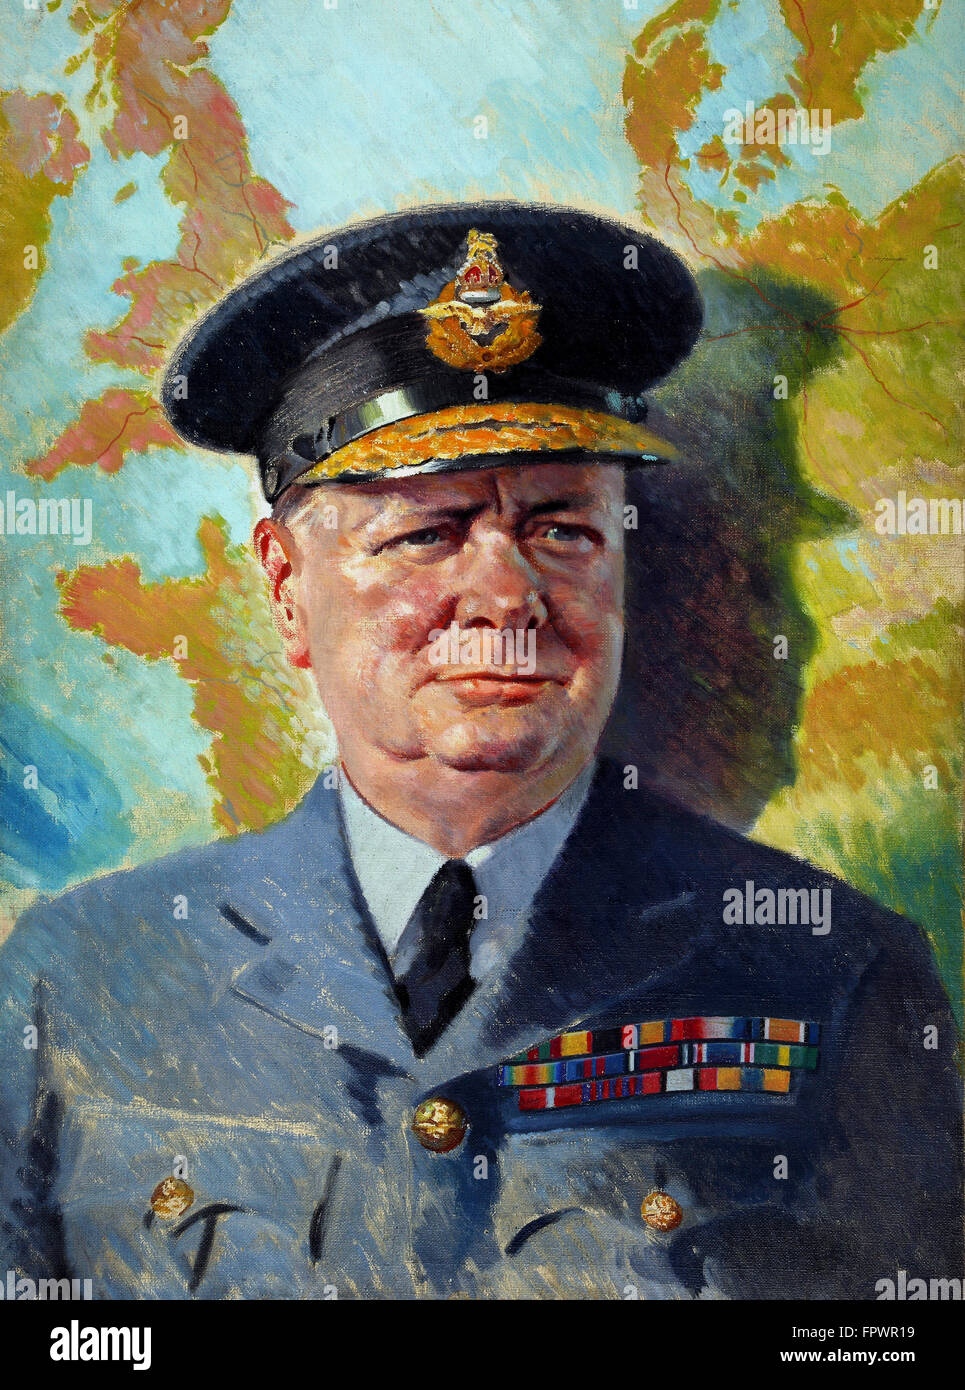 Vintage World War II painting of Winston Churchill wearing his RAF uniform. Stock Photo